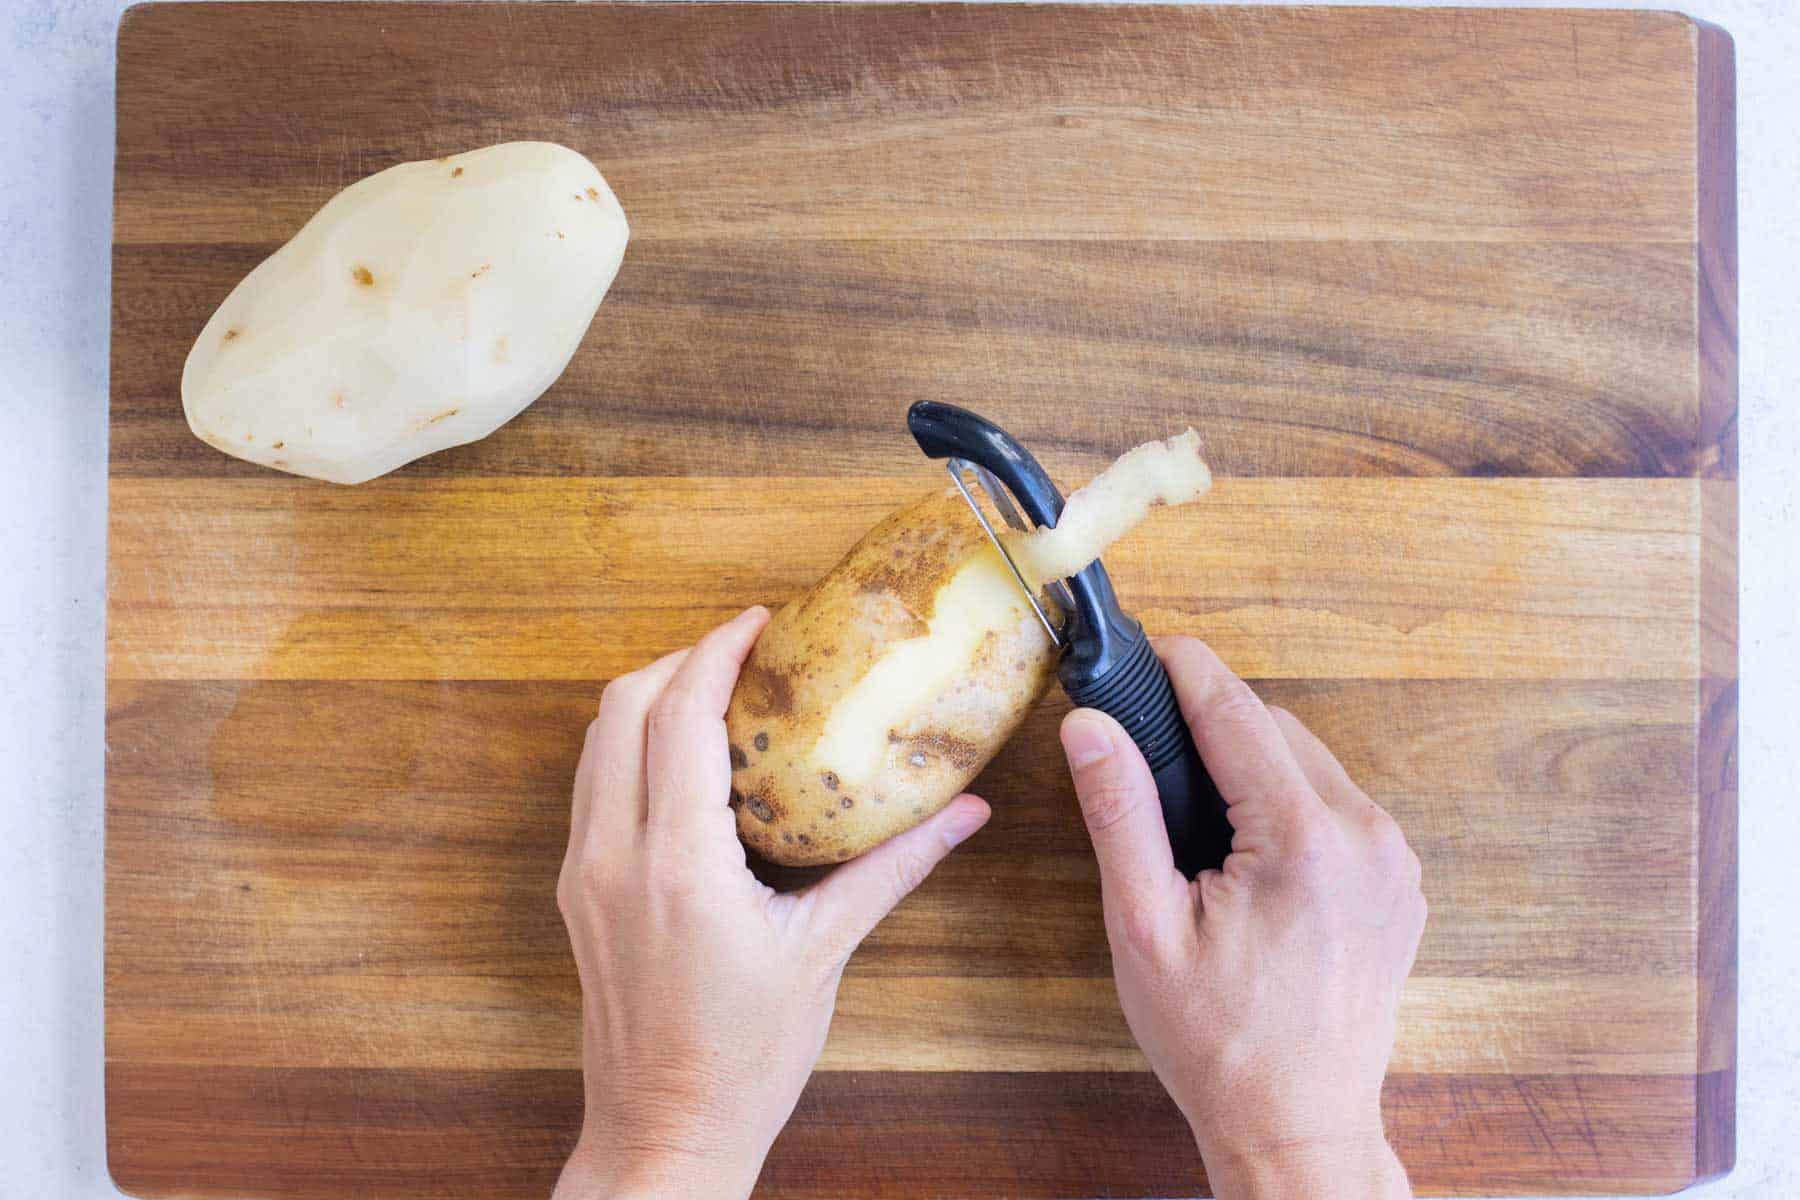 A potato is peeled to make mashed potatoes.